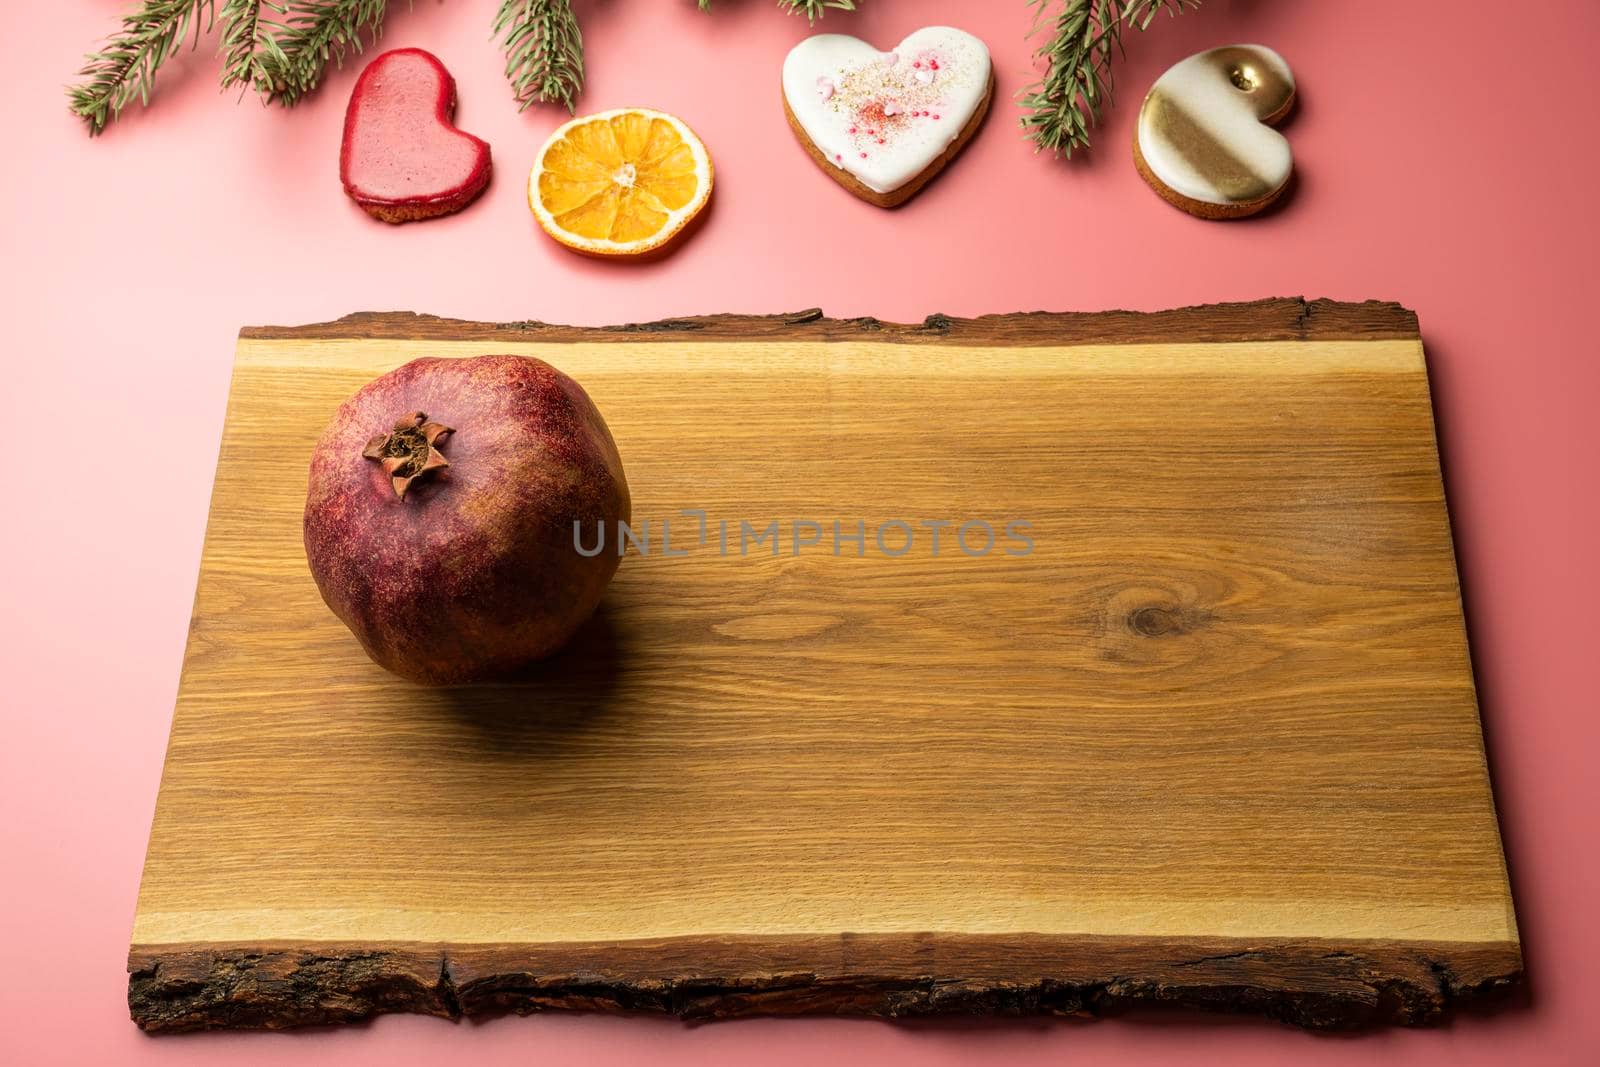 ripe pomegranate on a pink background. love. Fruit by roman112007